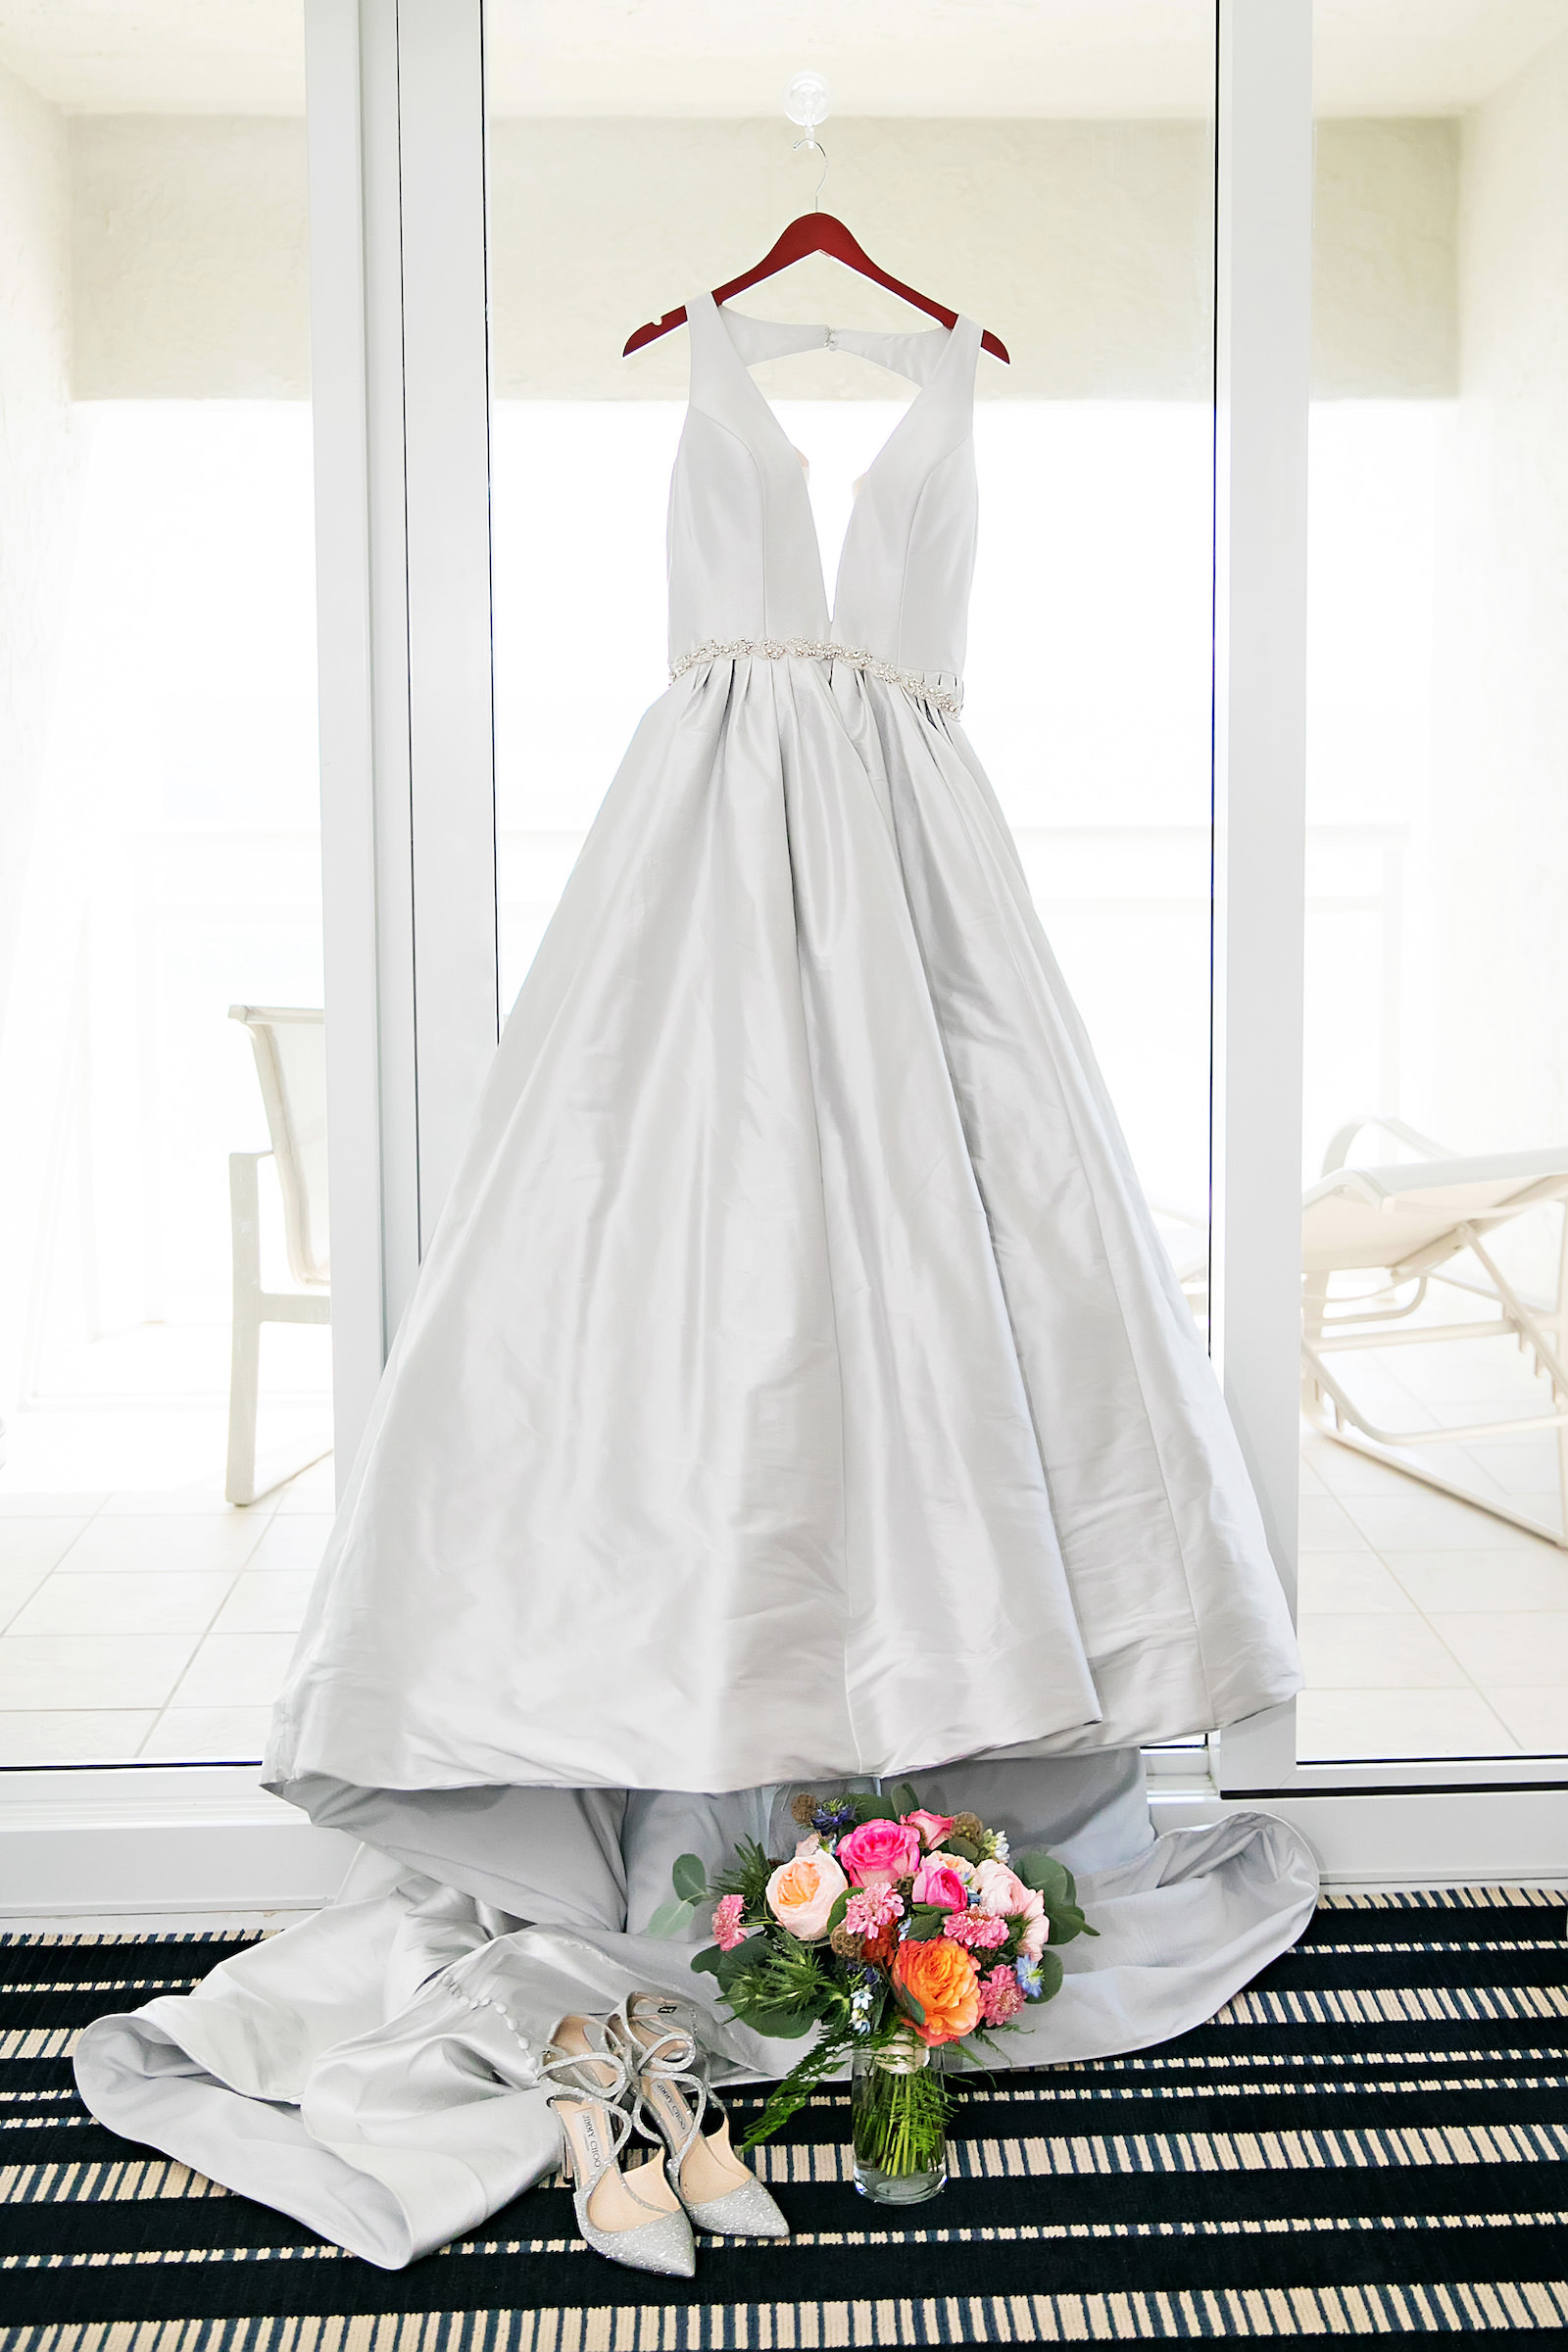 Deep V Neck Classic Simple Wedding Ballgown Hanging Portrait | Florida Photographer Limelight Photography